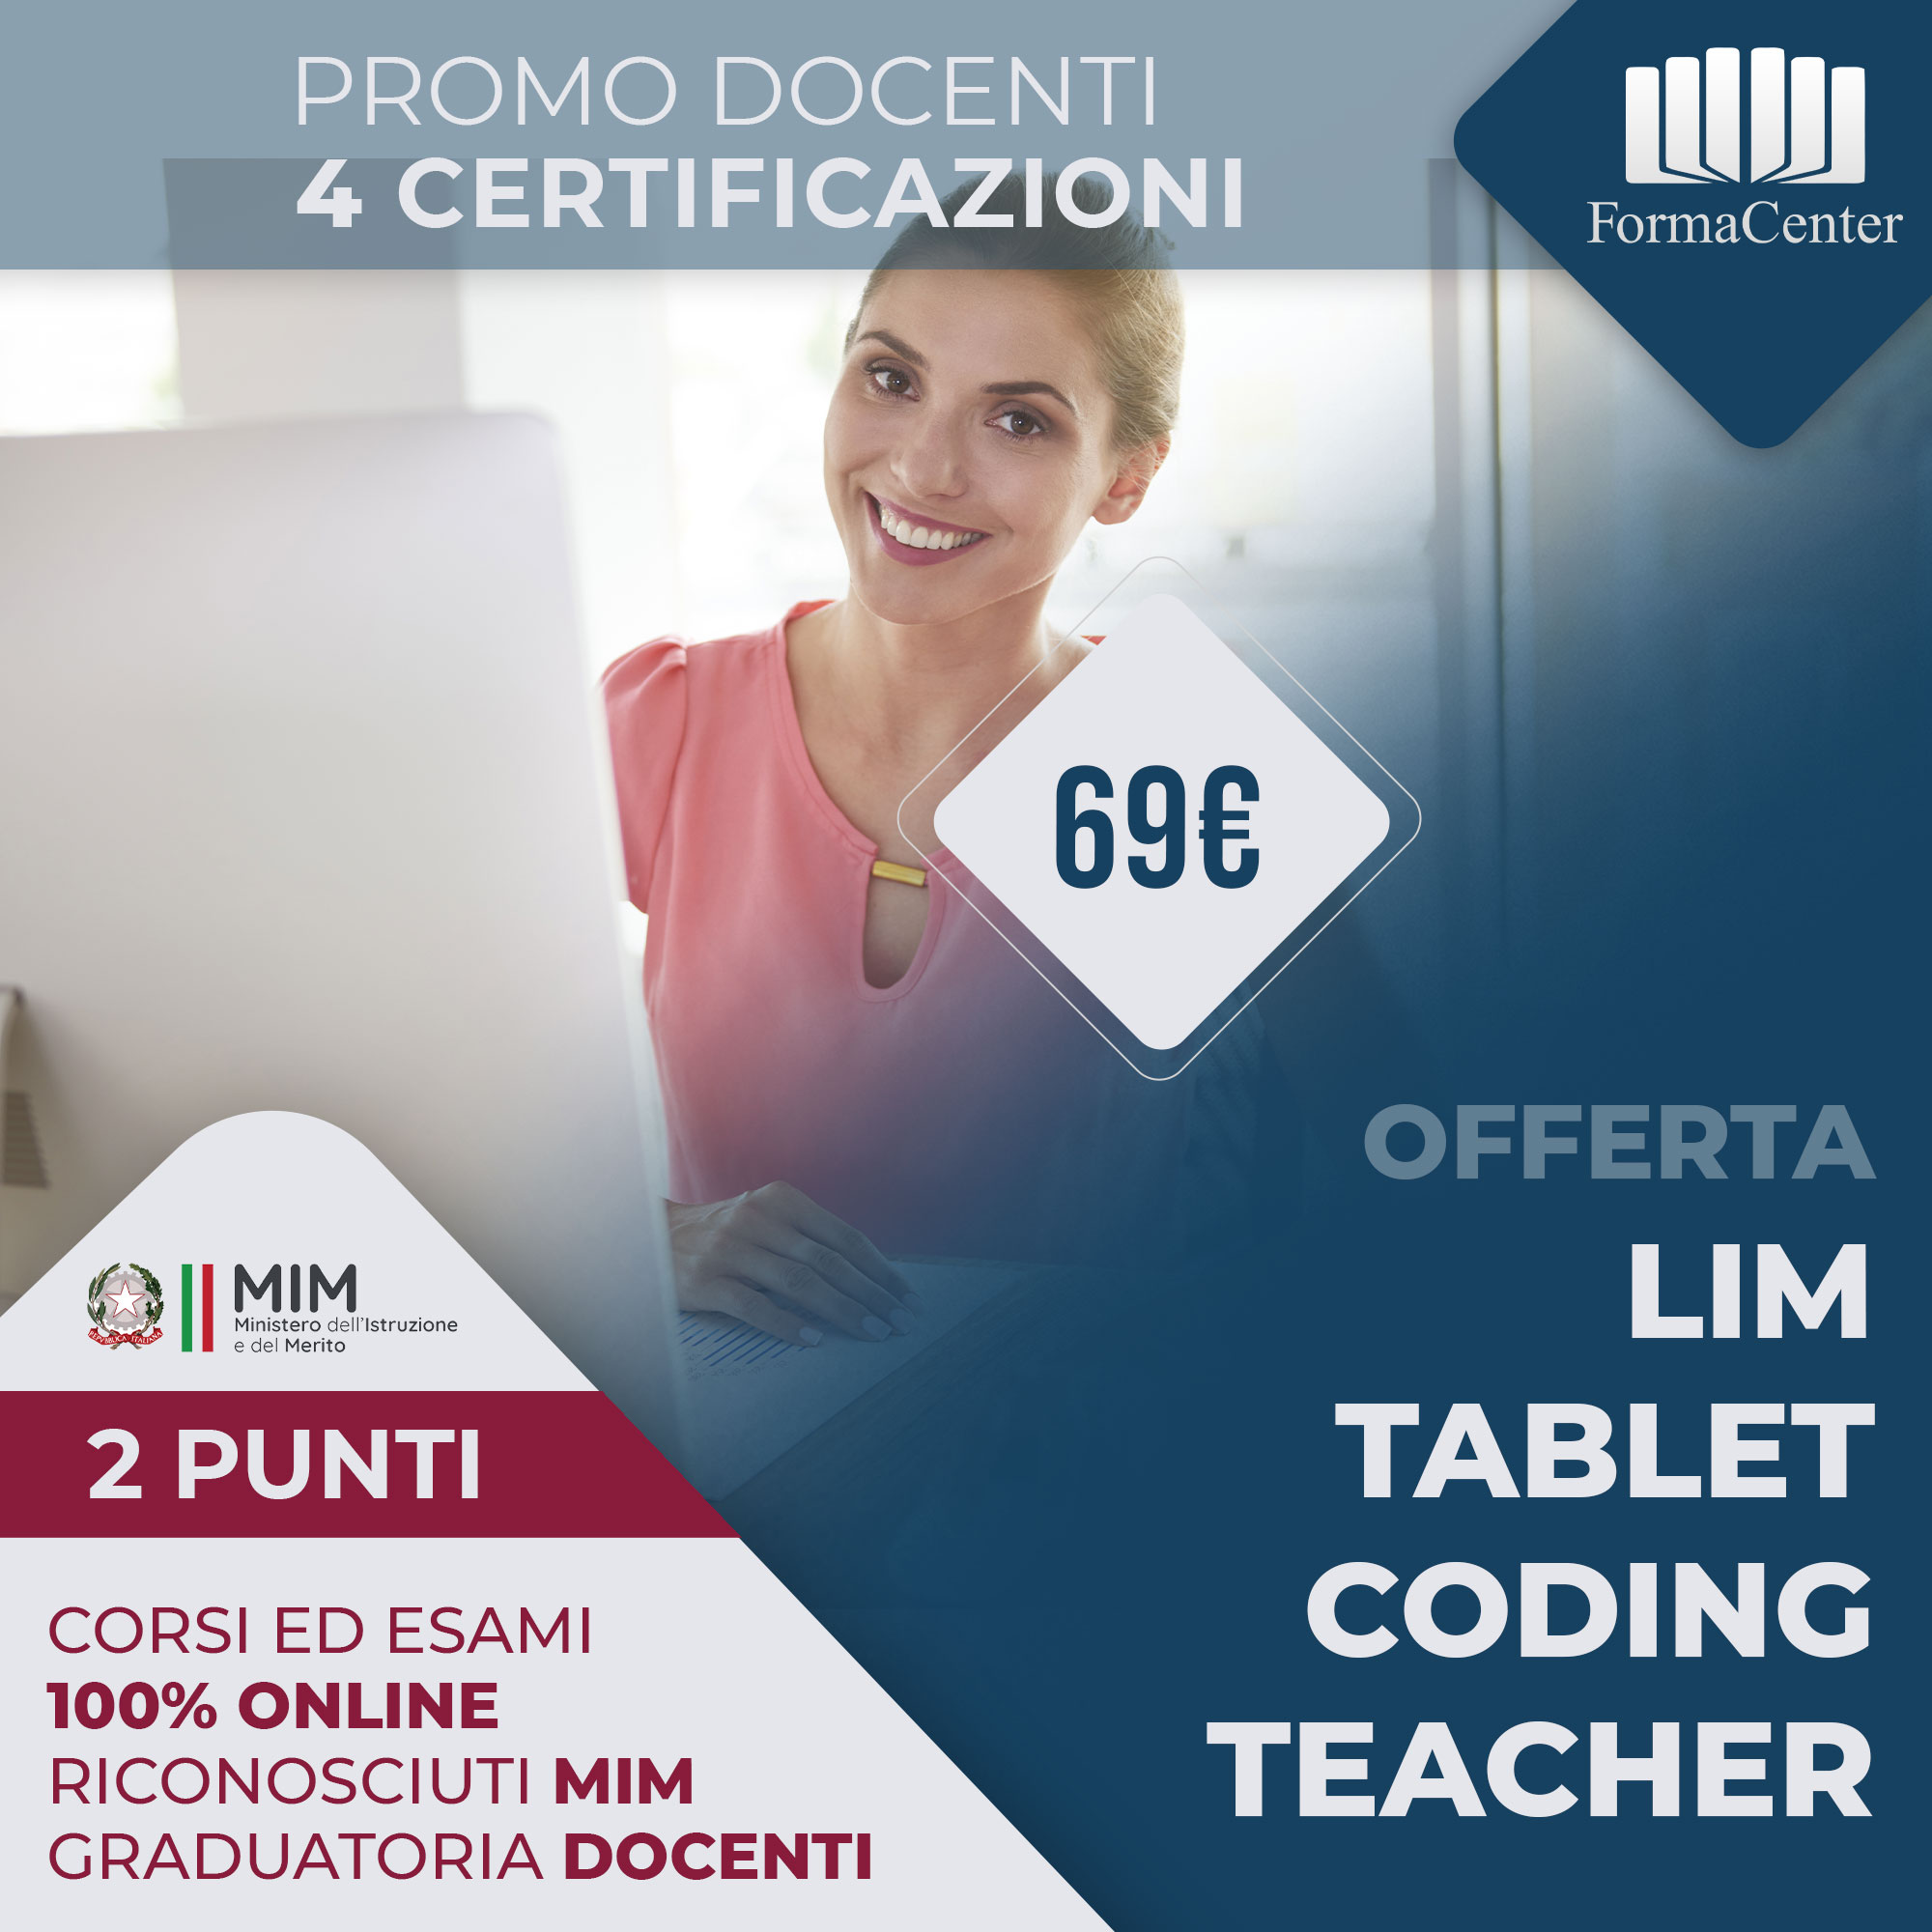 corso lim, tablet, coding e teacher